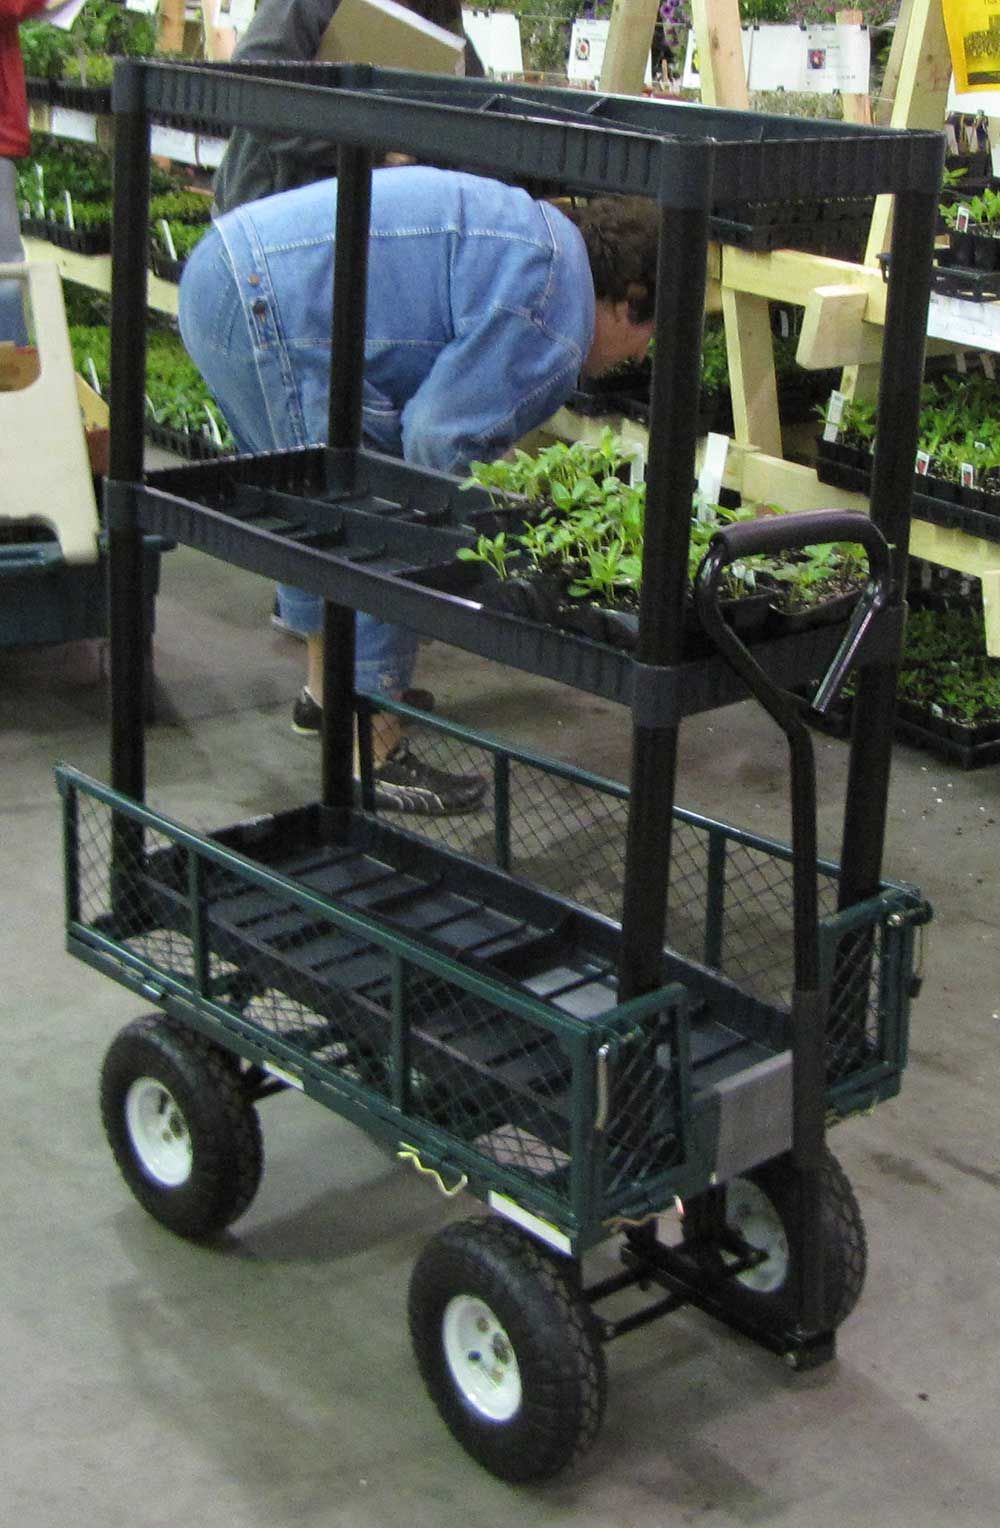 Green garden cart with plastic 3-shelf unit sitting in it